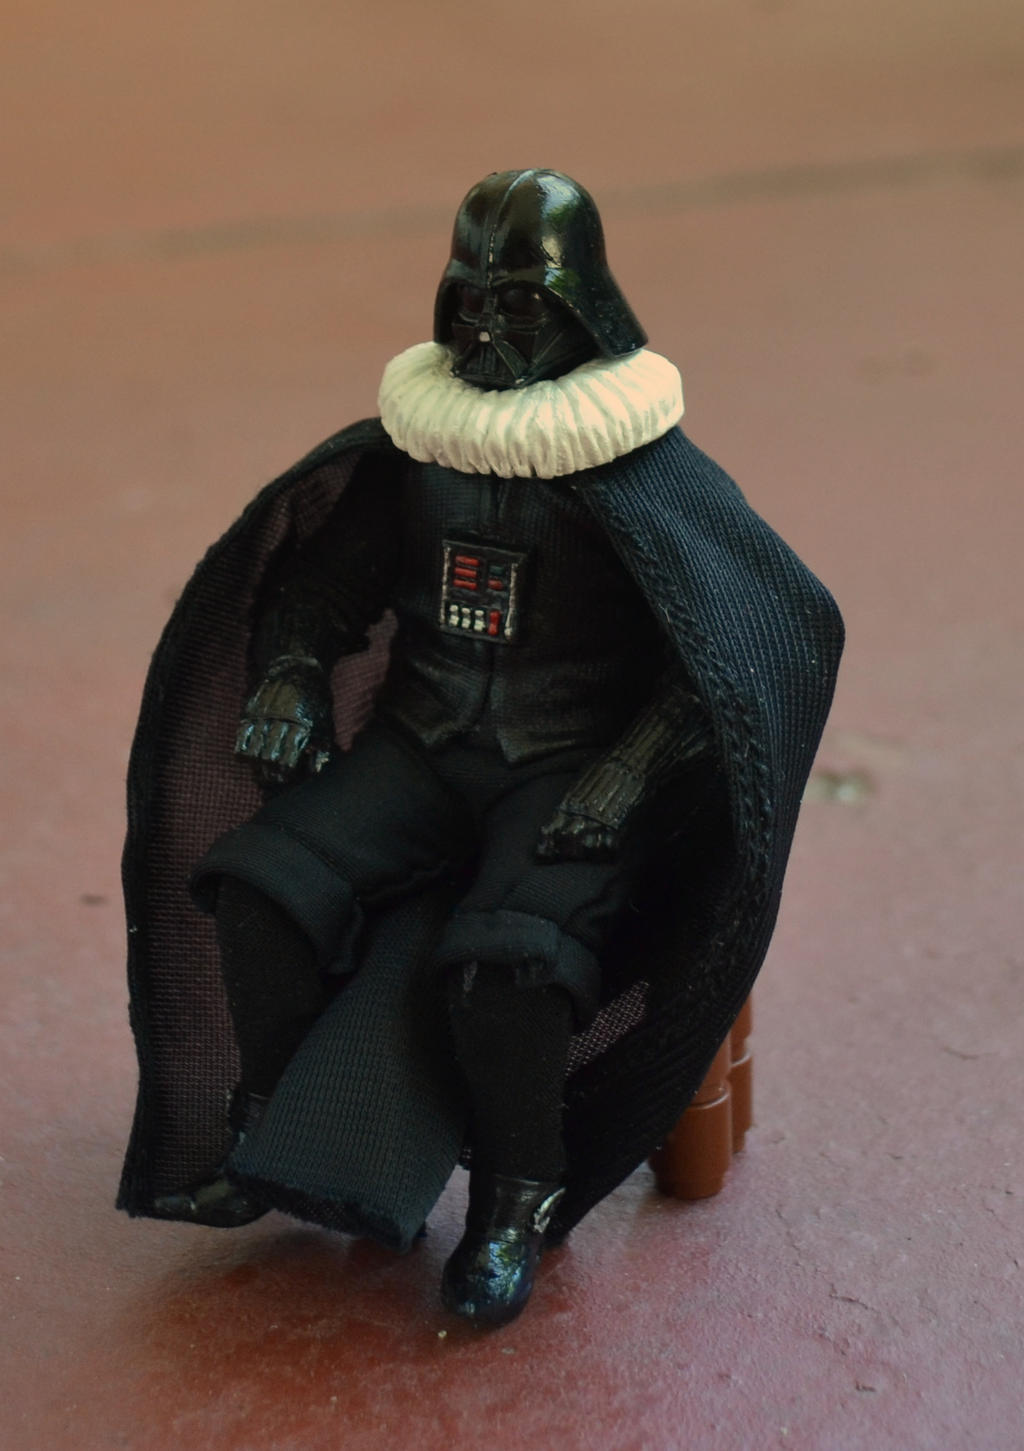 Flemish Lord Vader